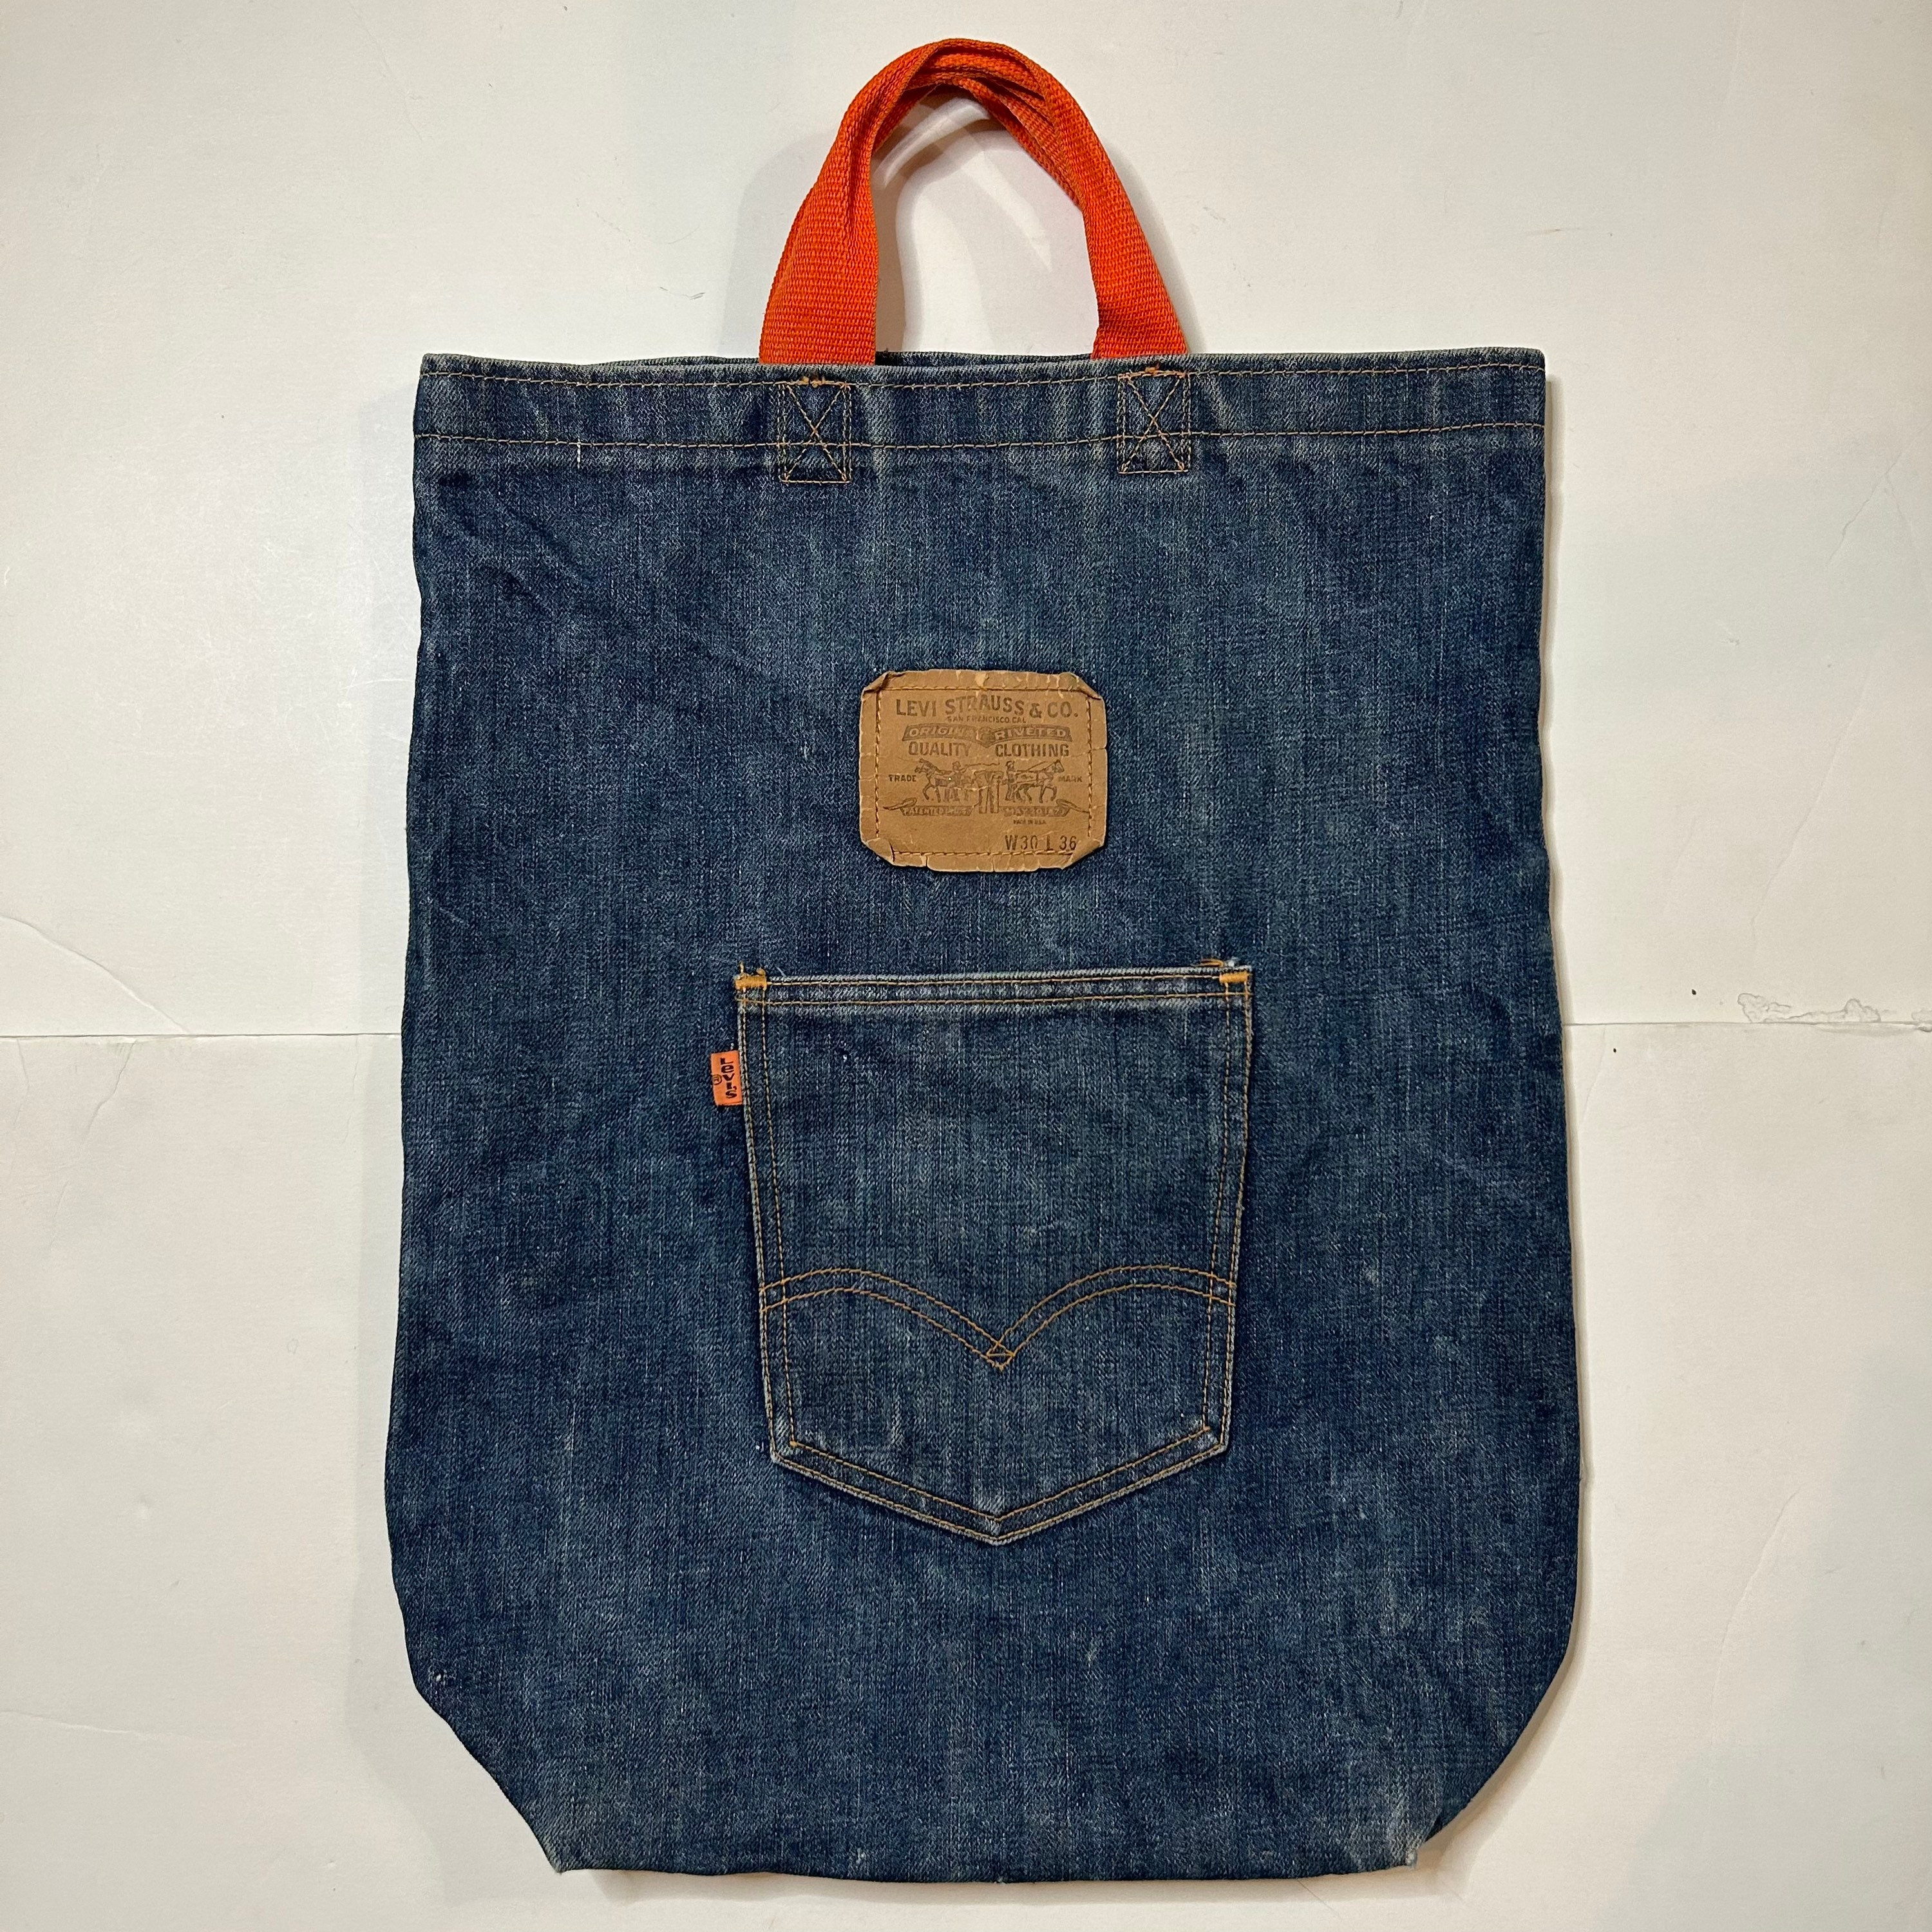 Levi's Men's Bags | Shop for Levi's Men's Bags | Stylicy